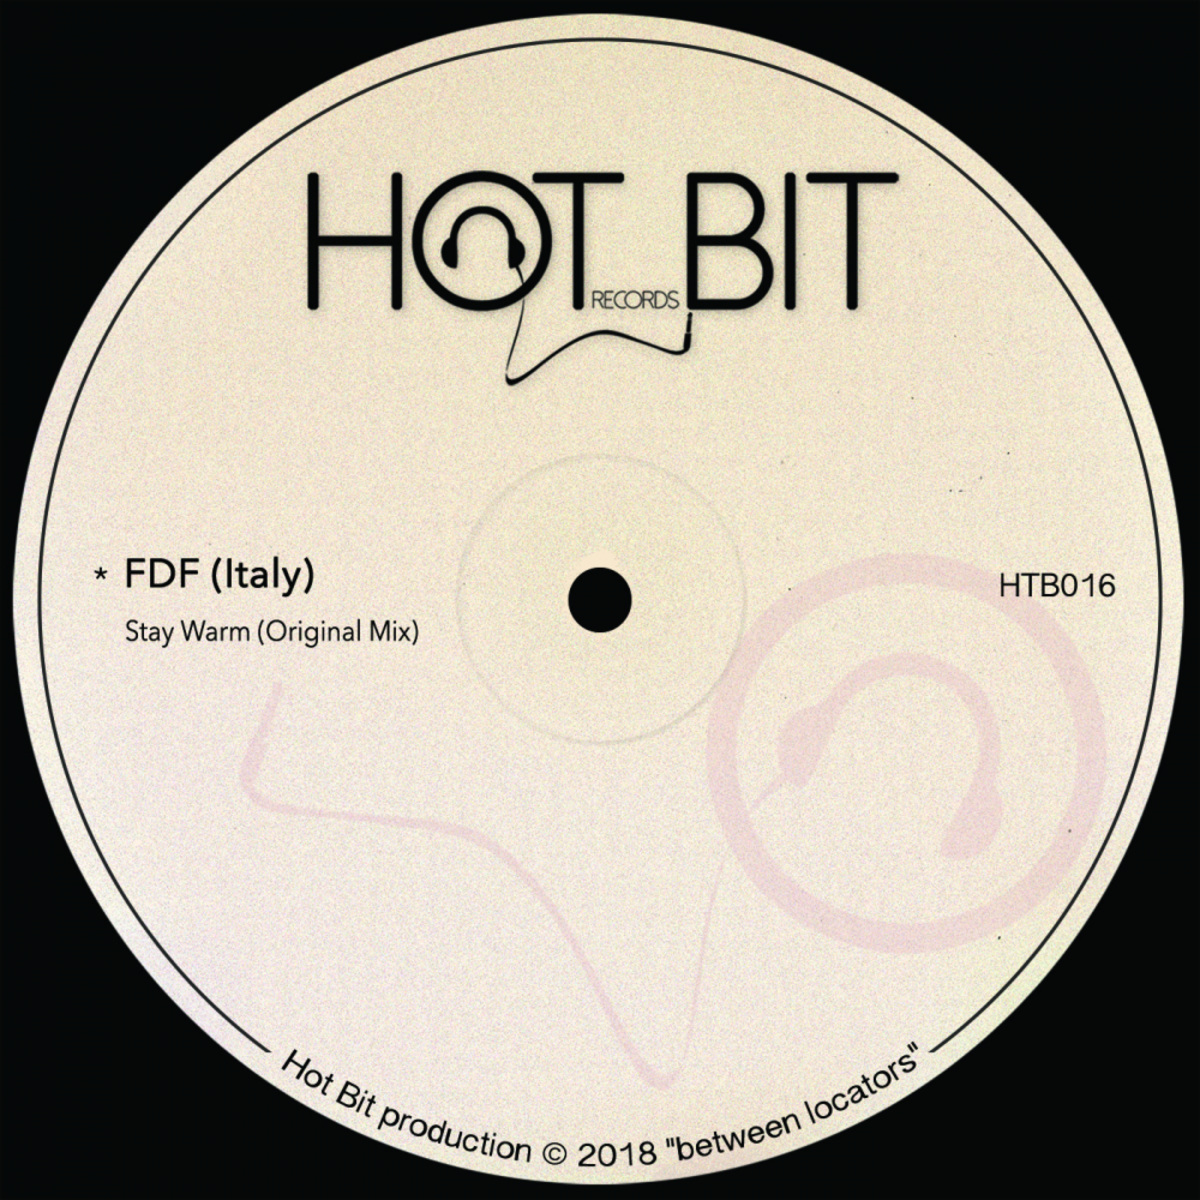 FDF (Italy) - Stay Warm / Hot Bit